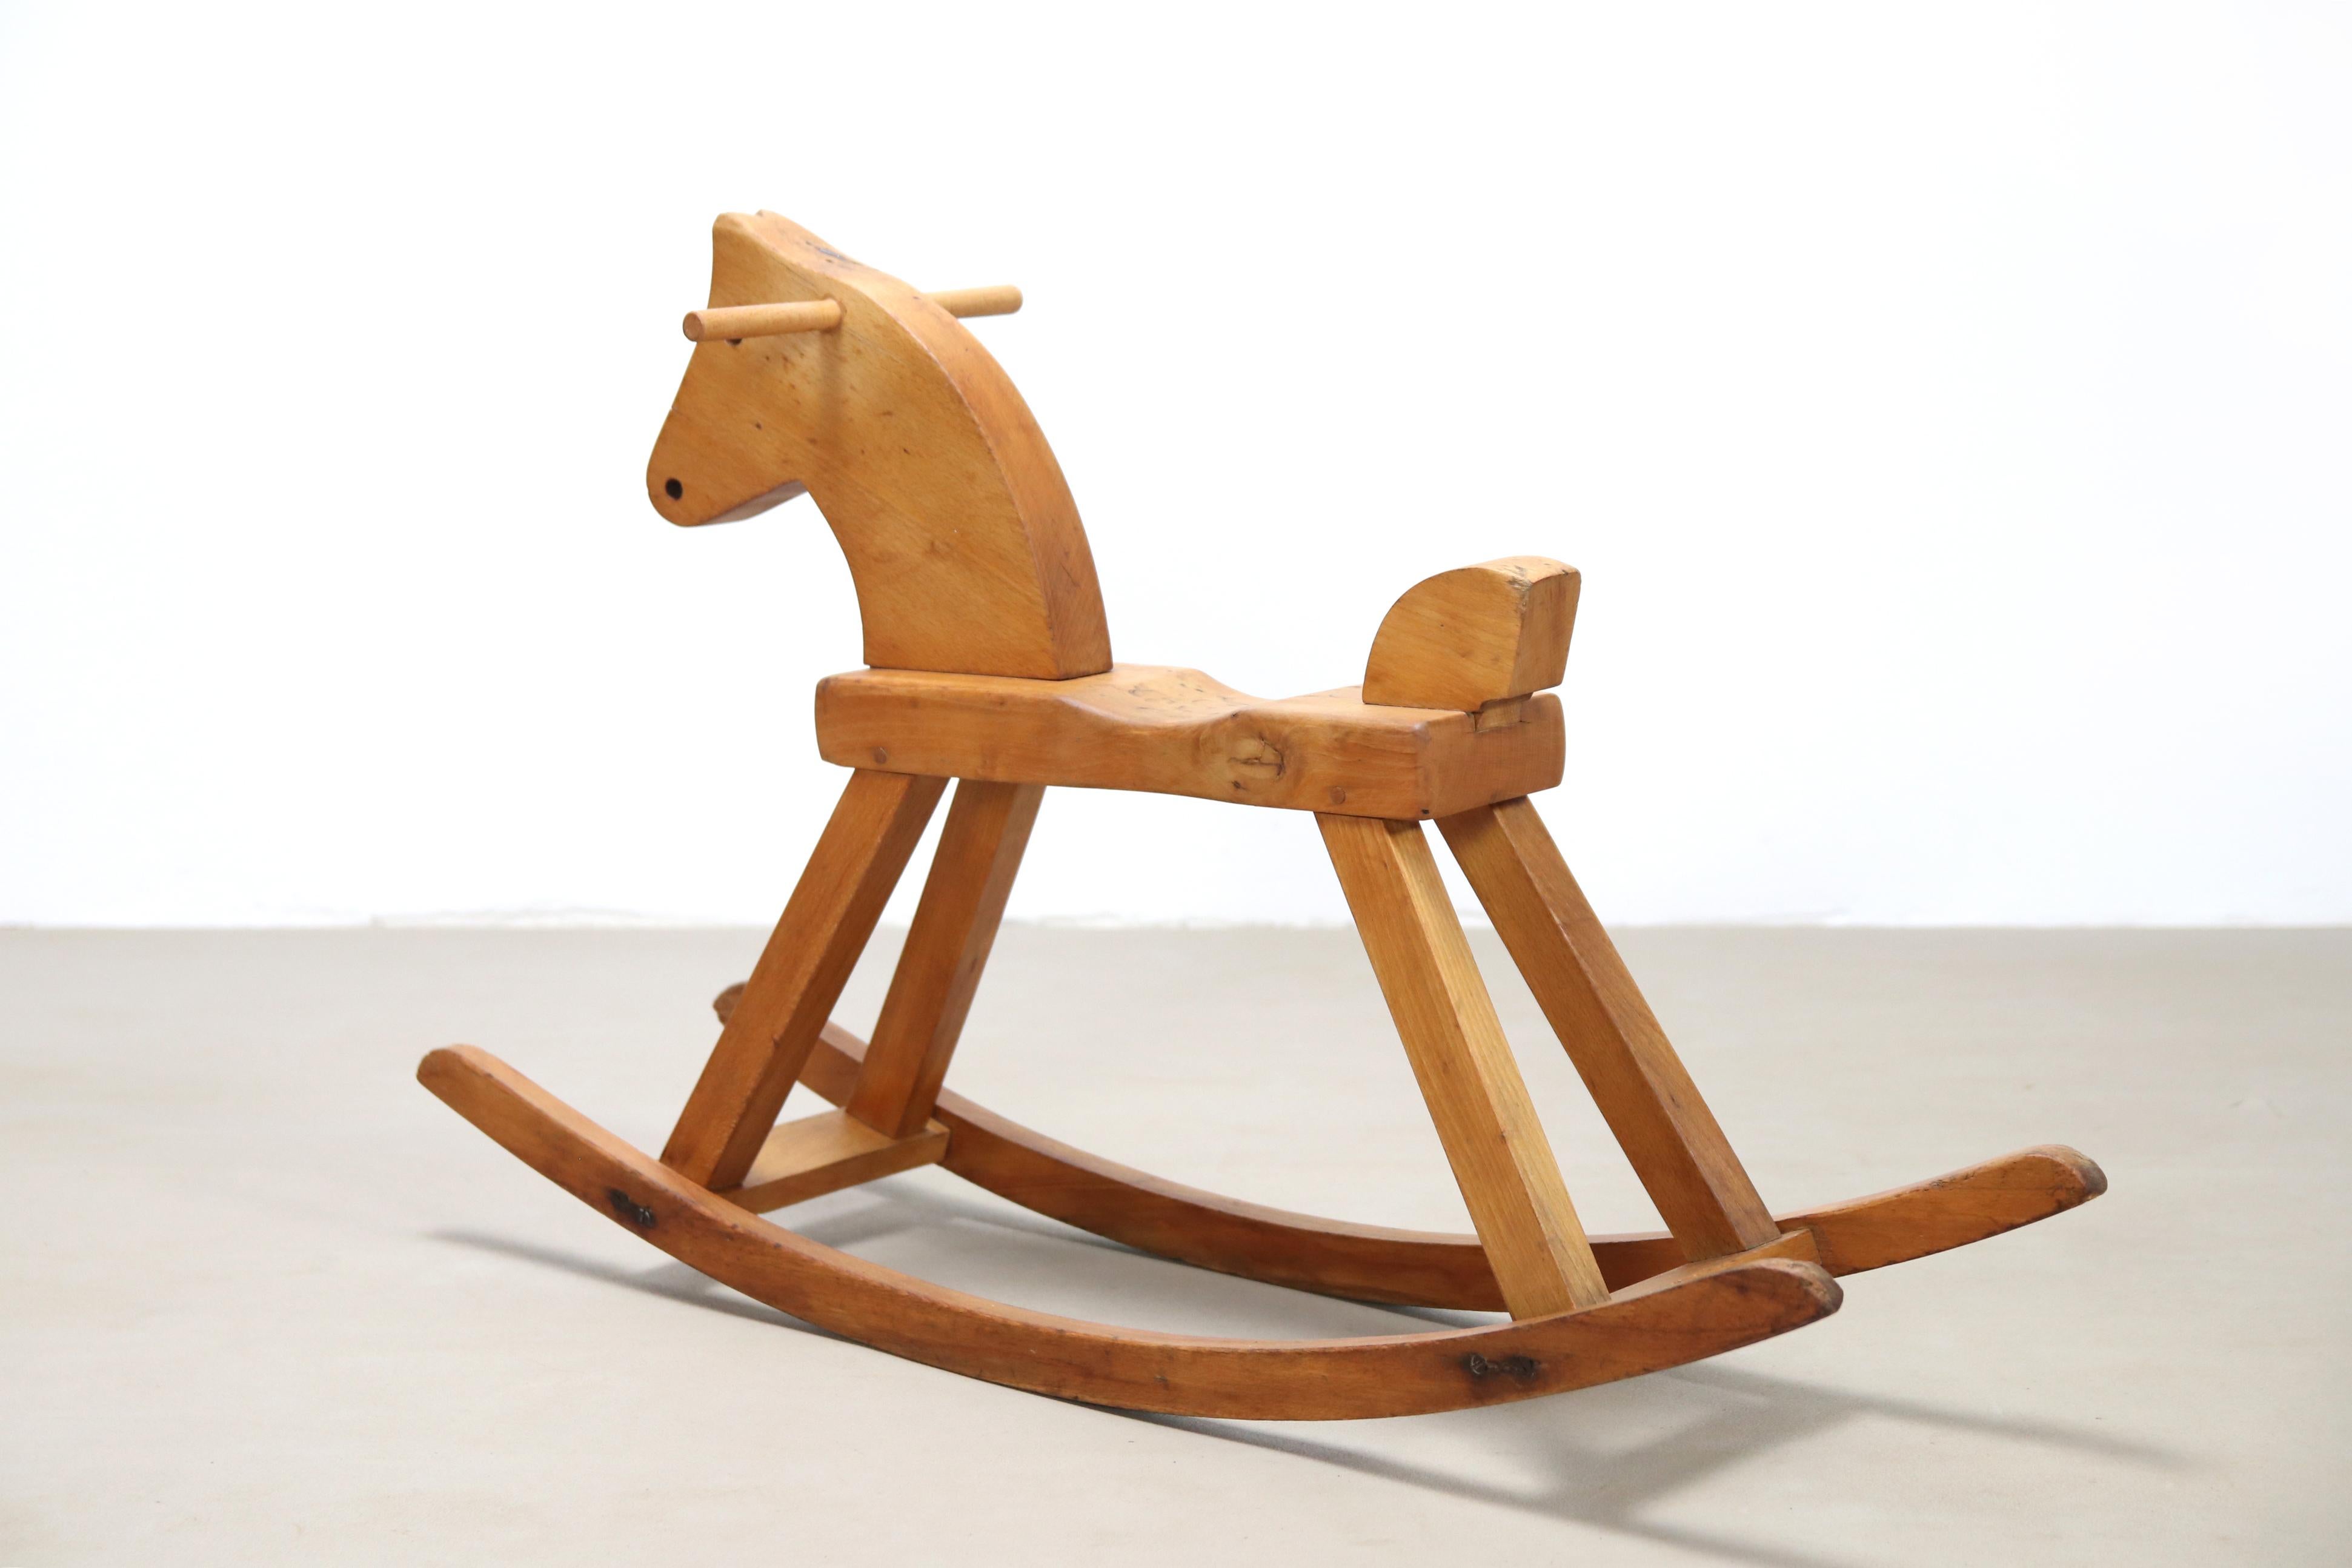 20th Century Kay Bojesen Danish design Wooden Rocking Horse, Denmark, 1936